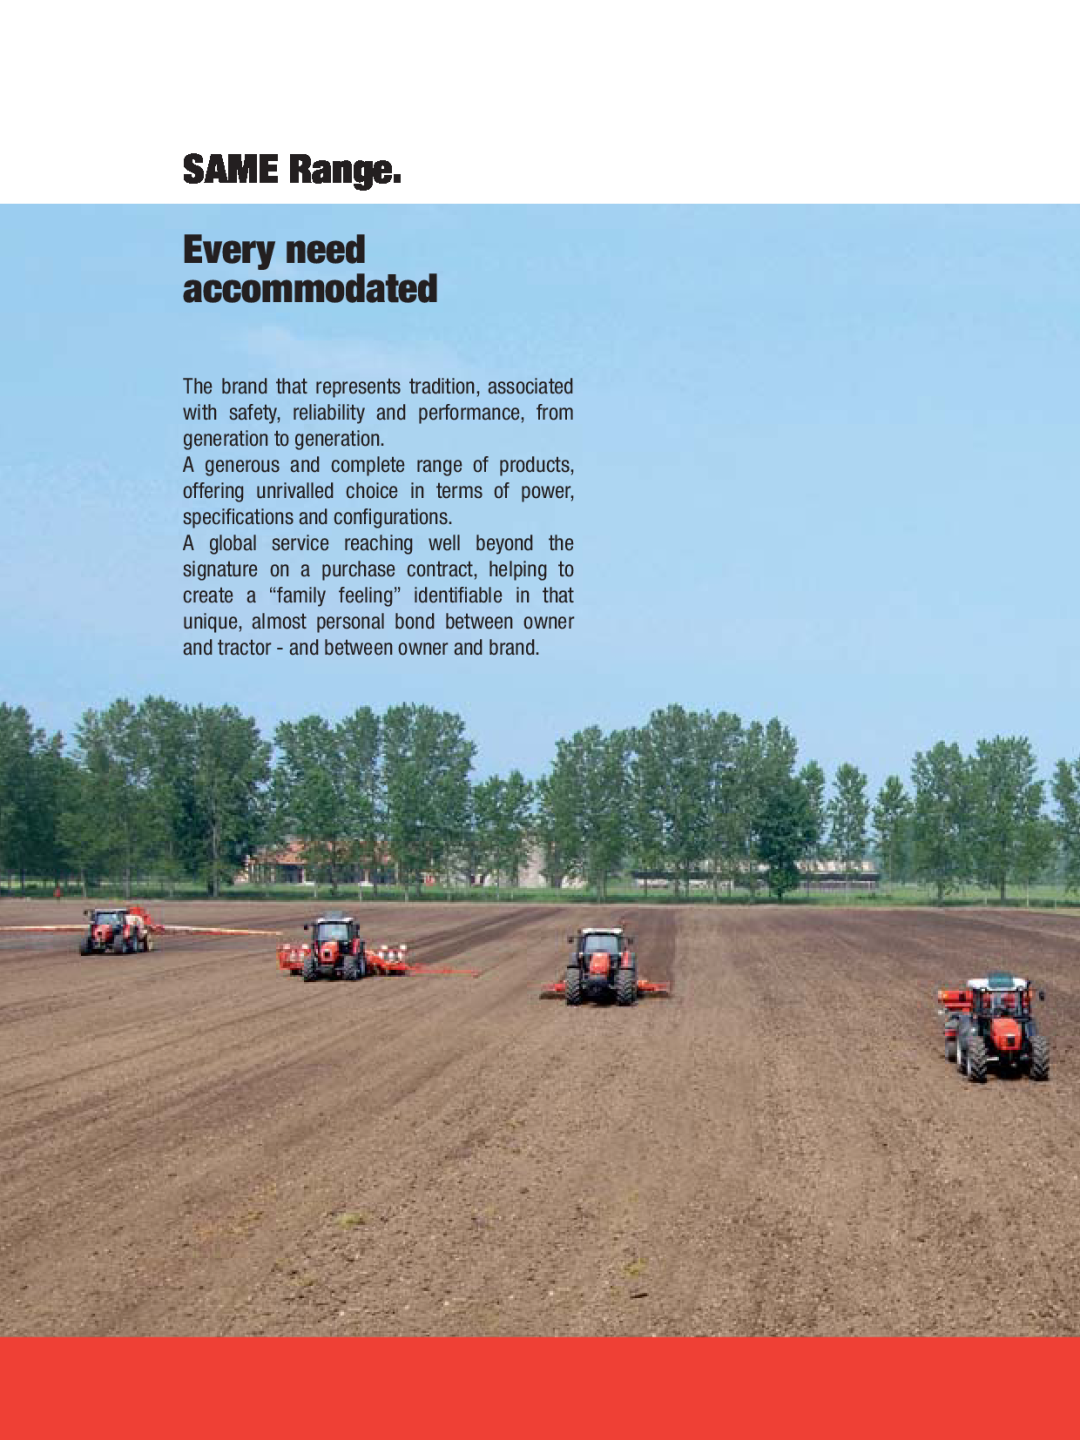 SAME Tractors manual SAME Range, Every need accommodated 